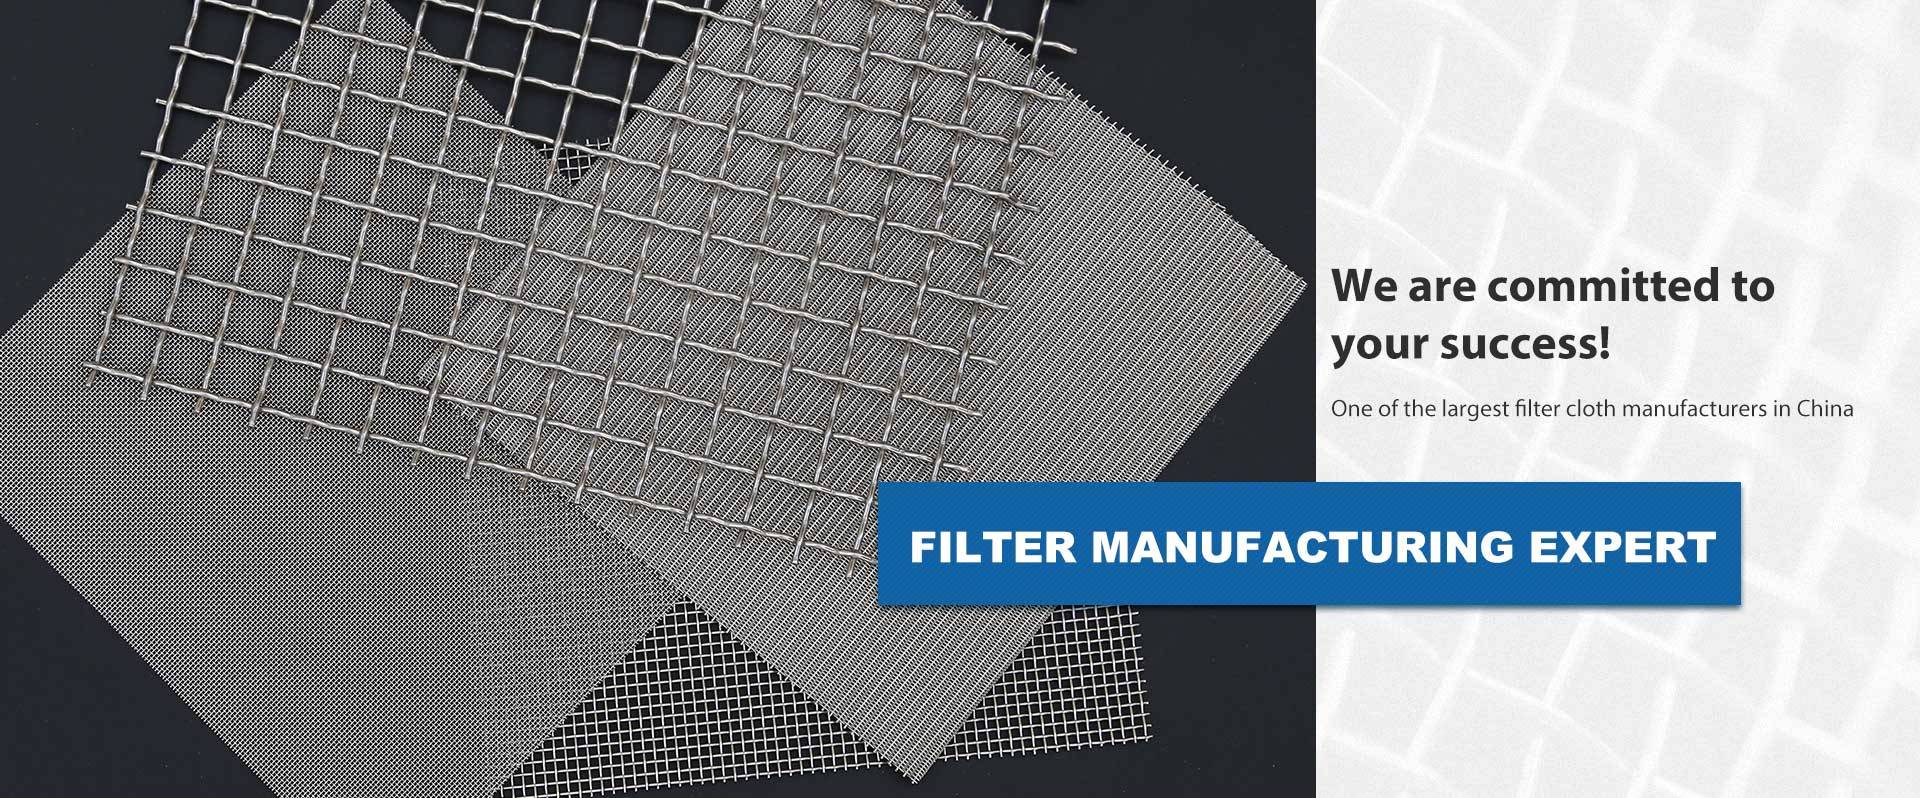 Filter manufacturing expert